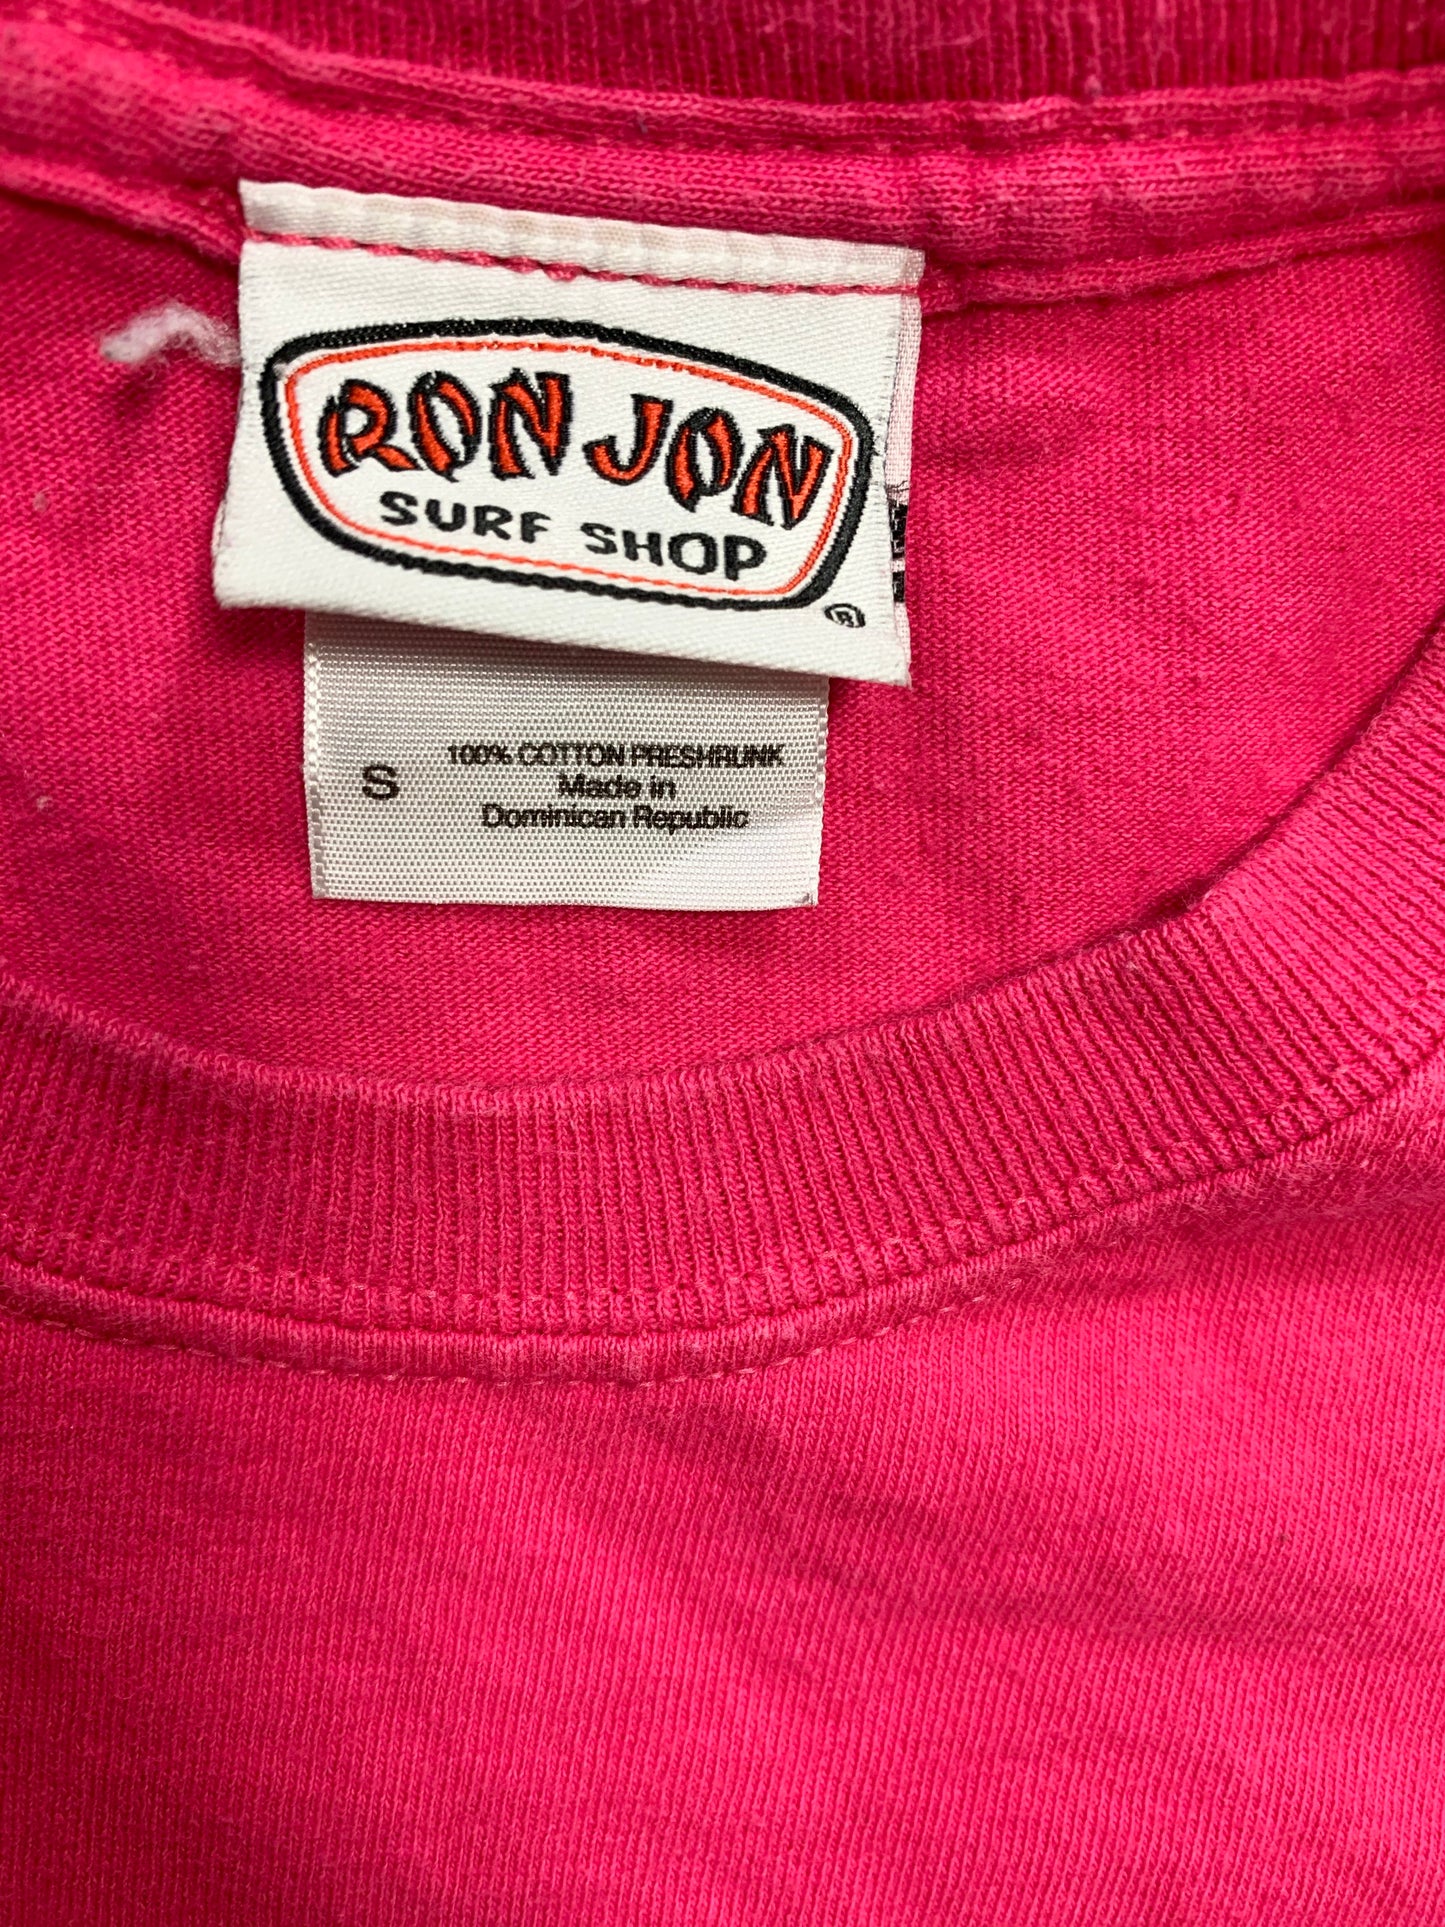 【RONJON SURF SHOP】ロンジョンサーフショップ  マゼンダ Tシャツ (men's S)